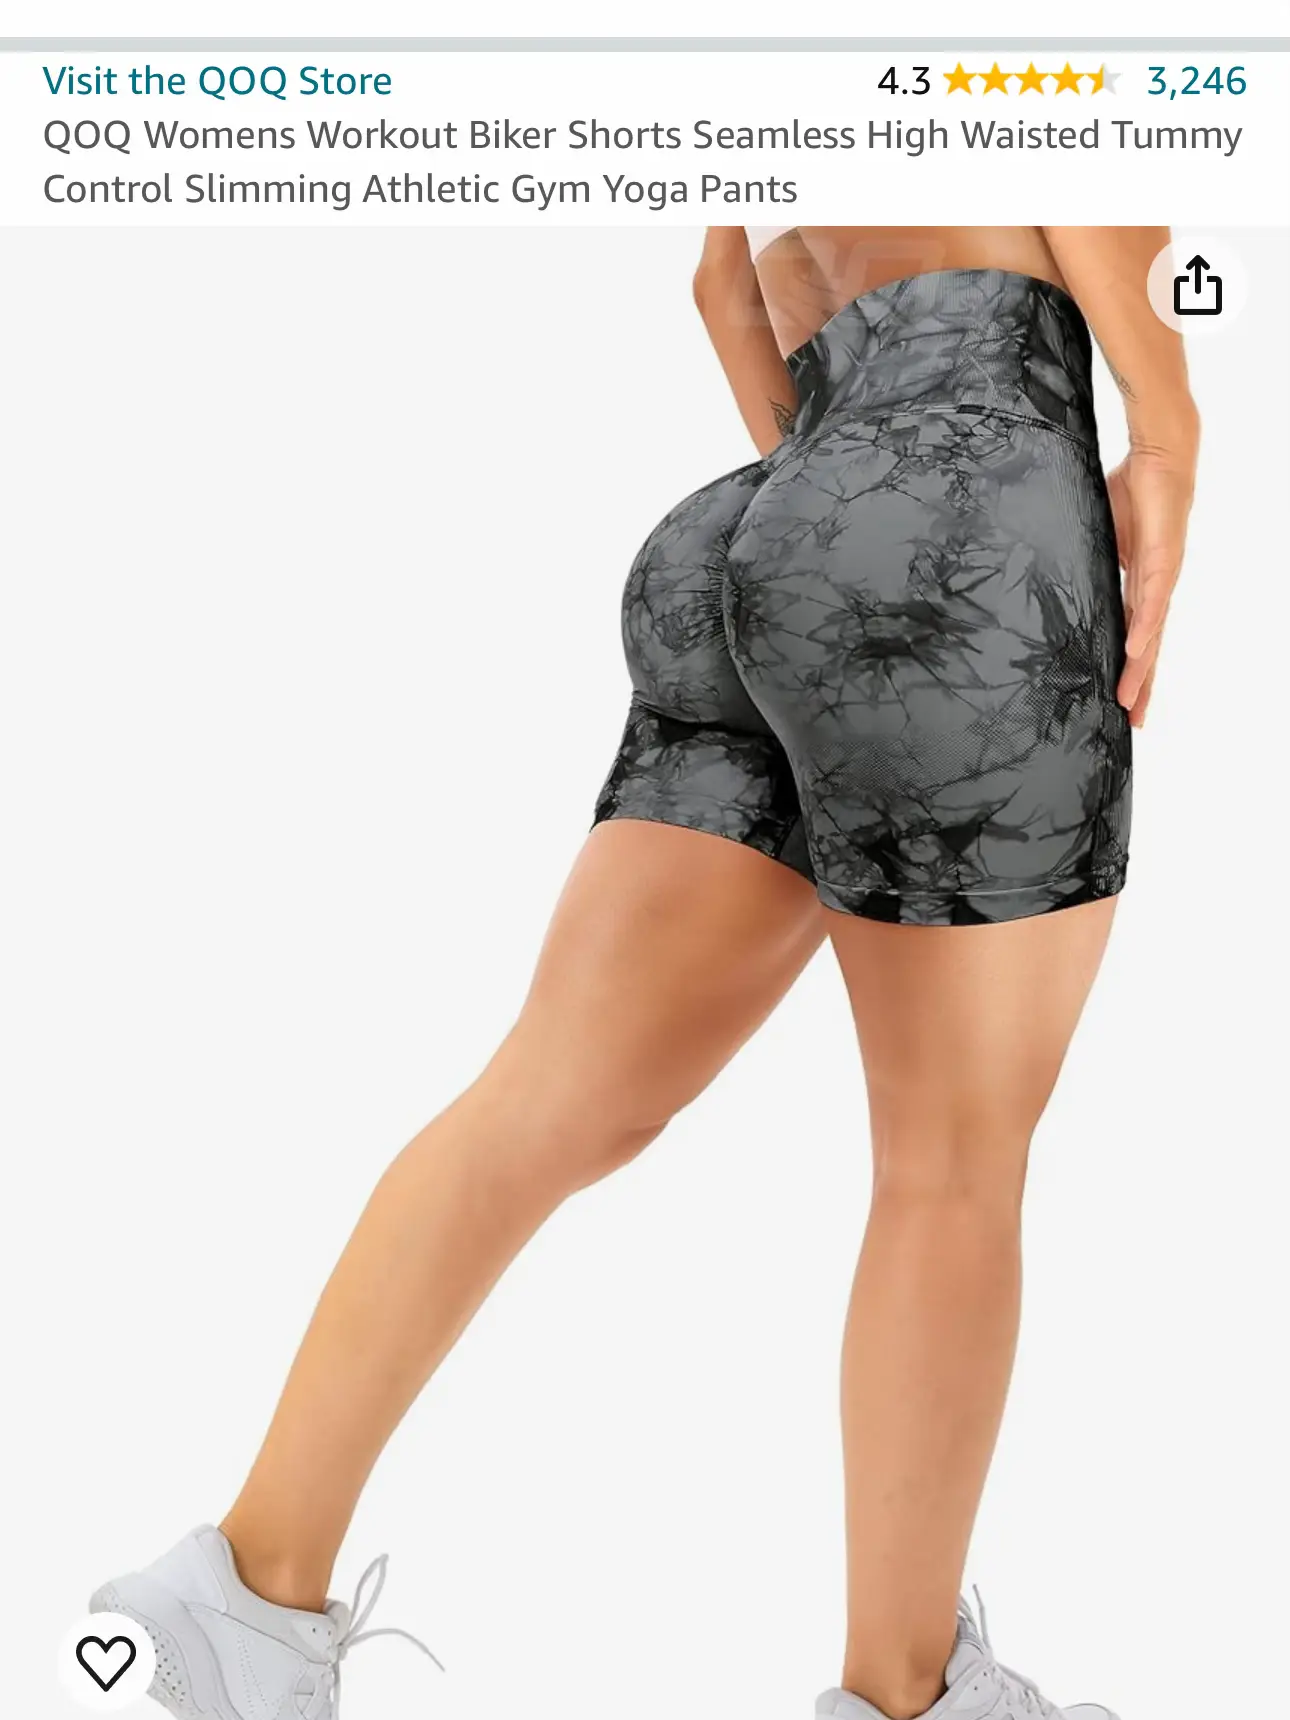 AUROLA Power Scrunch Butt Workout Shorts for Women Seamless Gym Shorts High  Waist Tummy Control Yoga Biker Shorts,Naval Academy,XS at  Women's  Clothing store